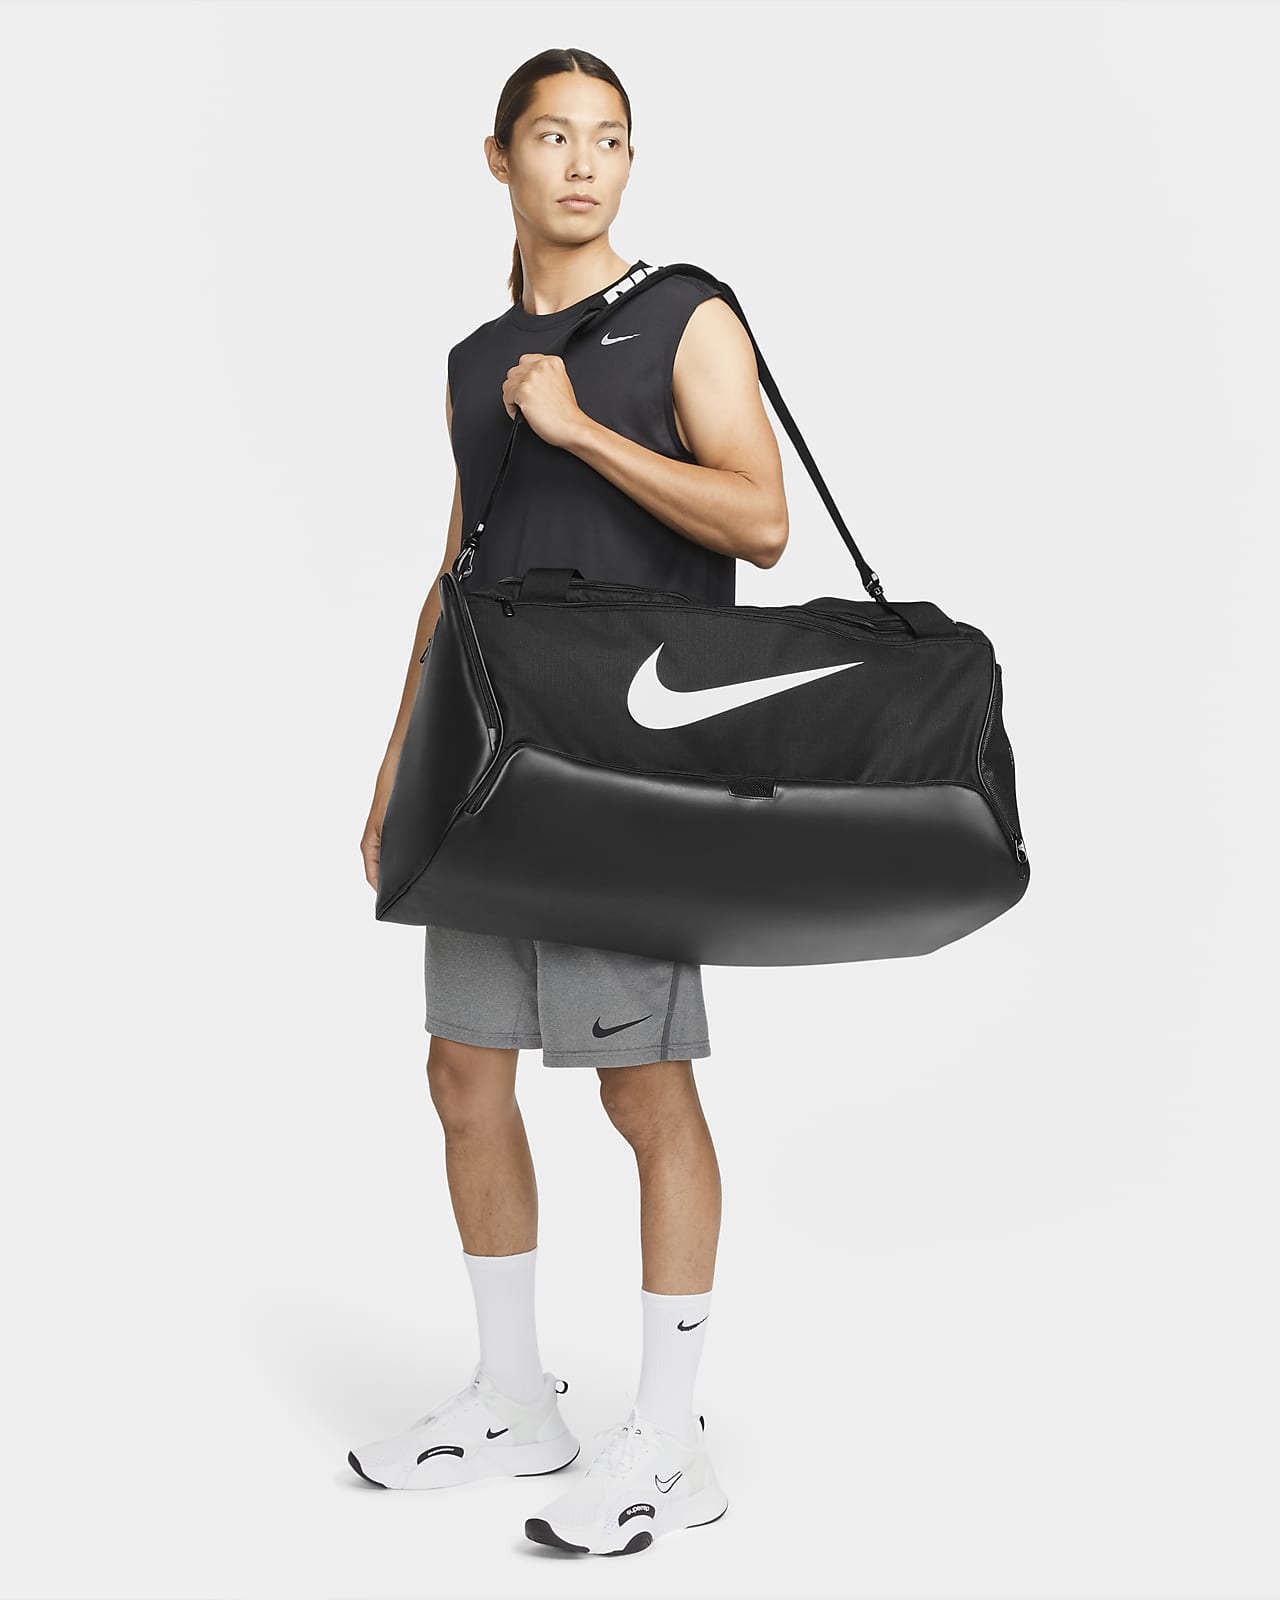 Nike Brasilia 9.5 Training Duffel Bag (Large, 95L). Nike CH